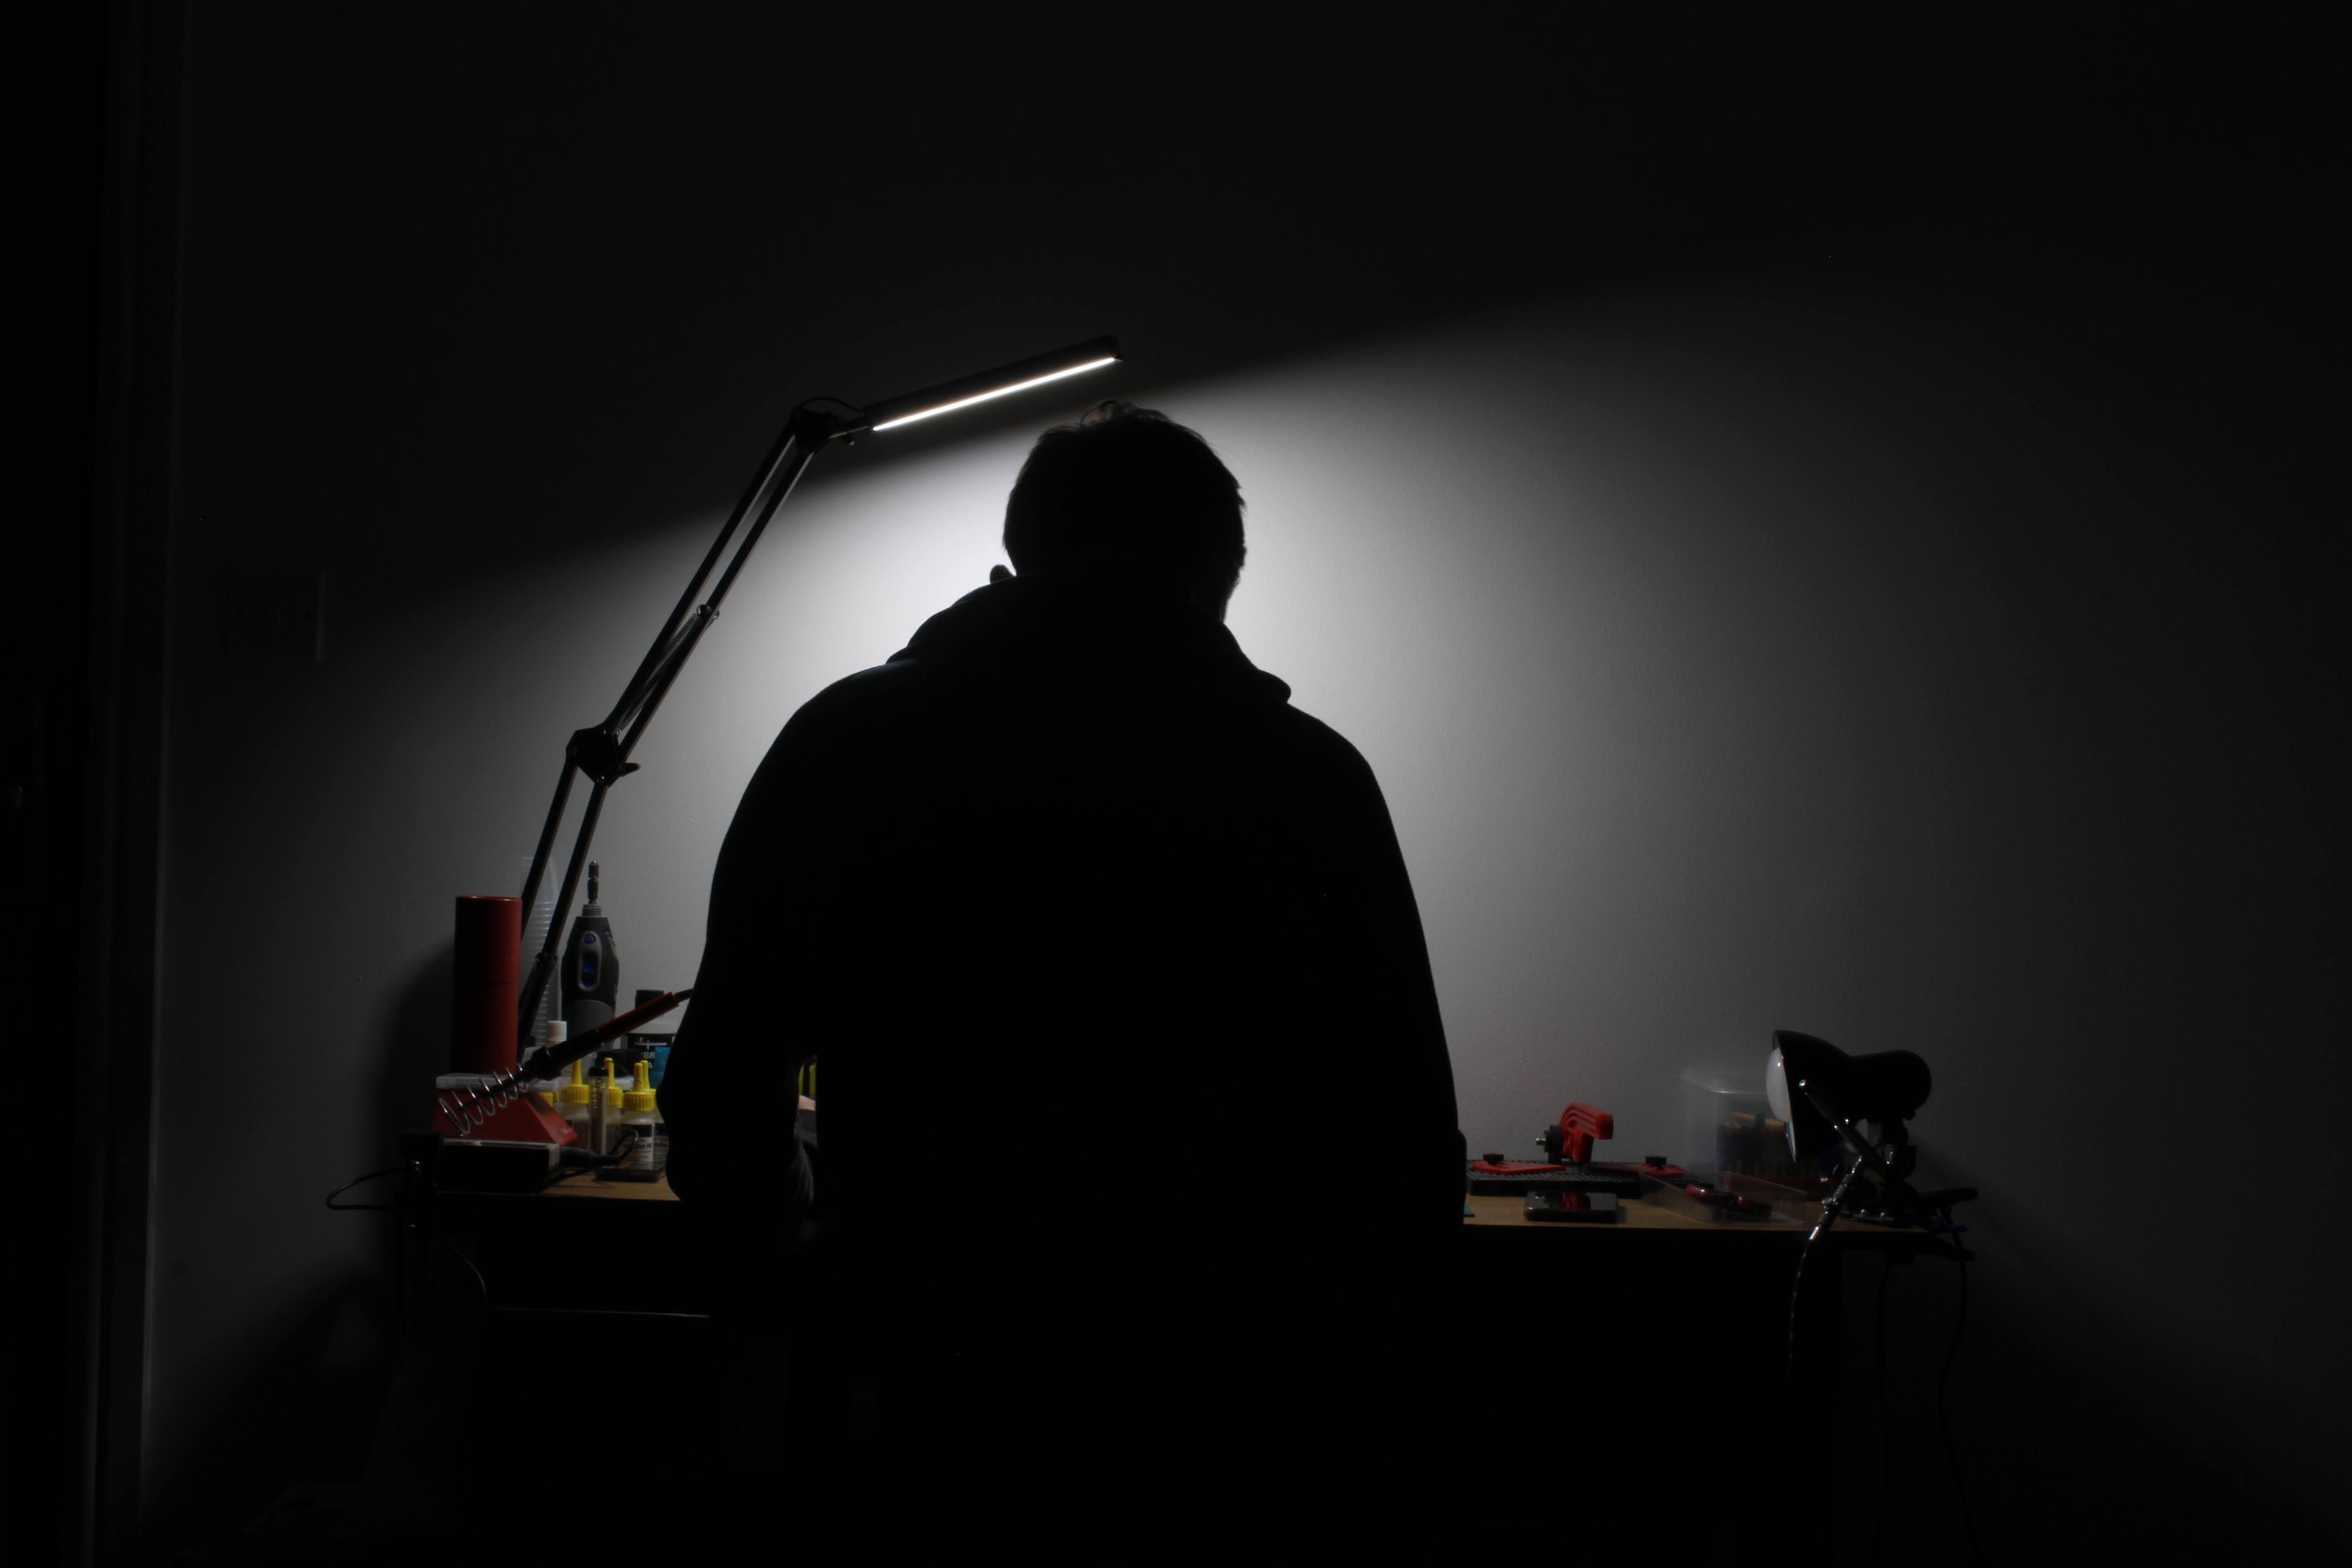 Time Capsule Scratch Builder at his desk in the dark